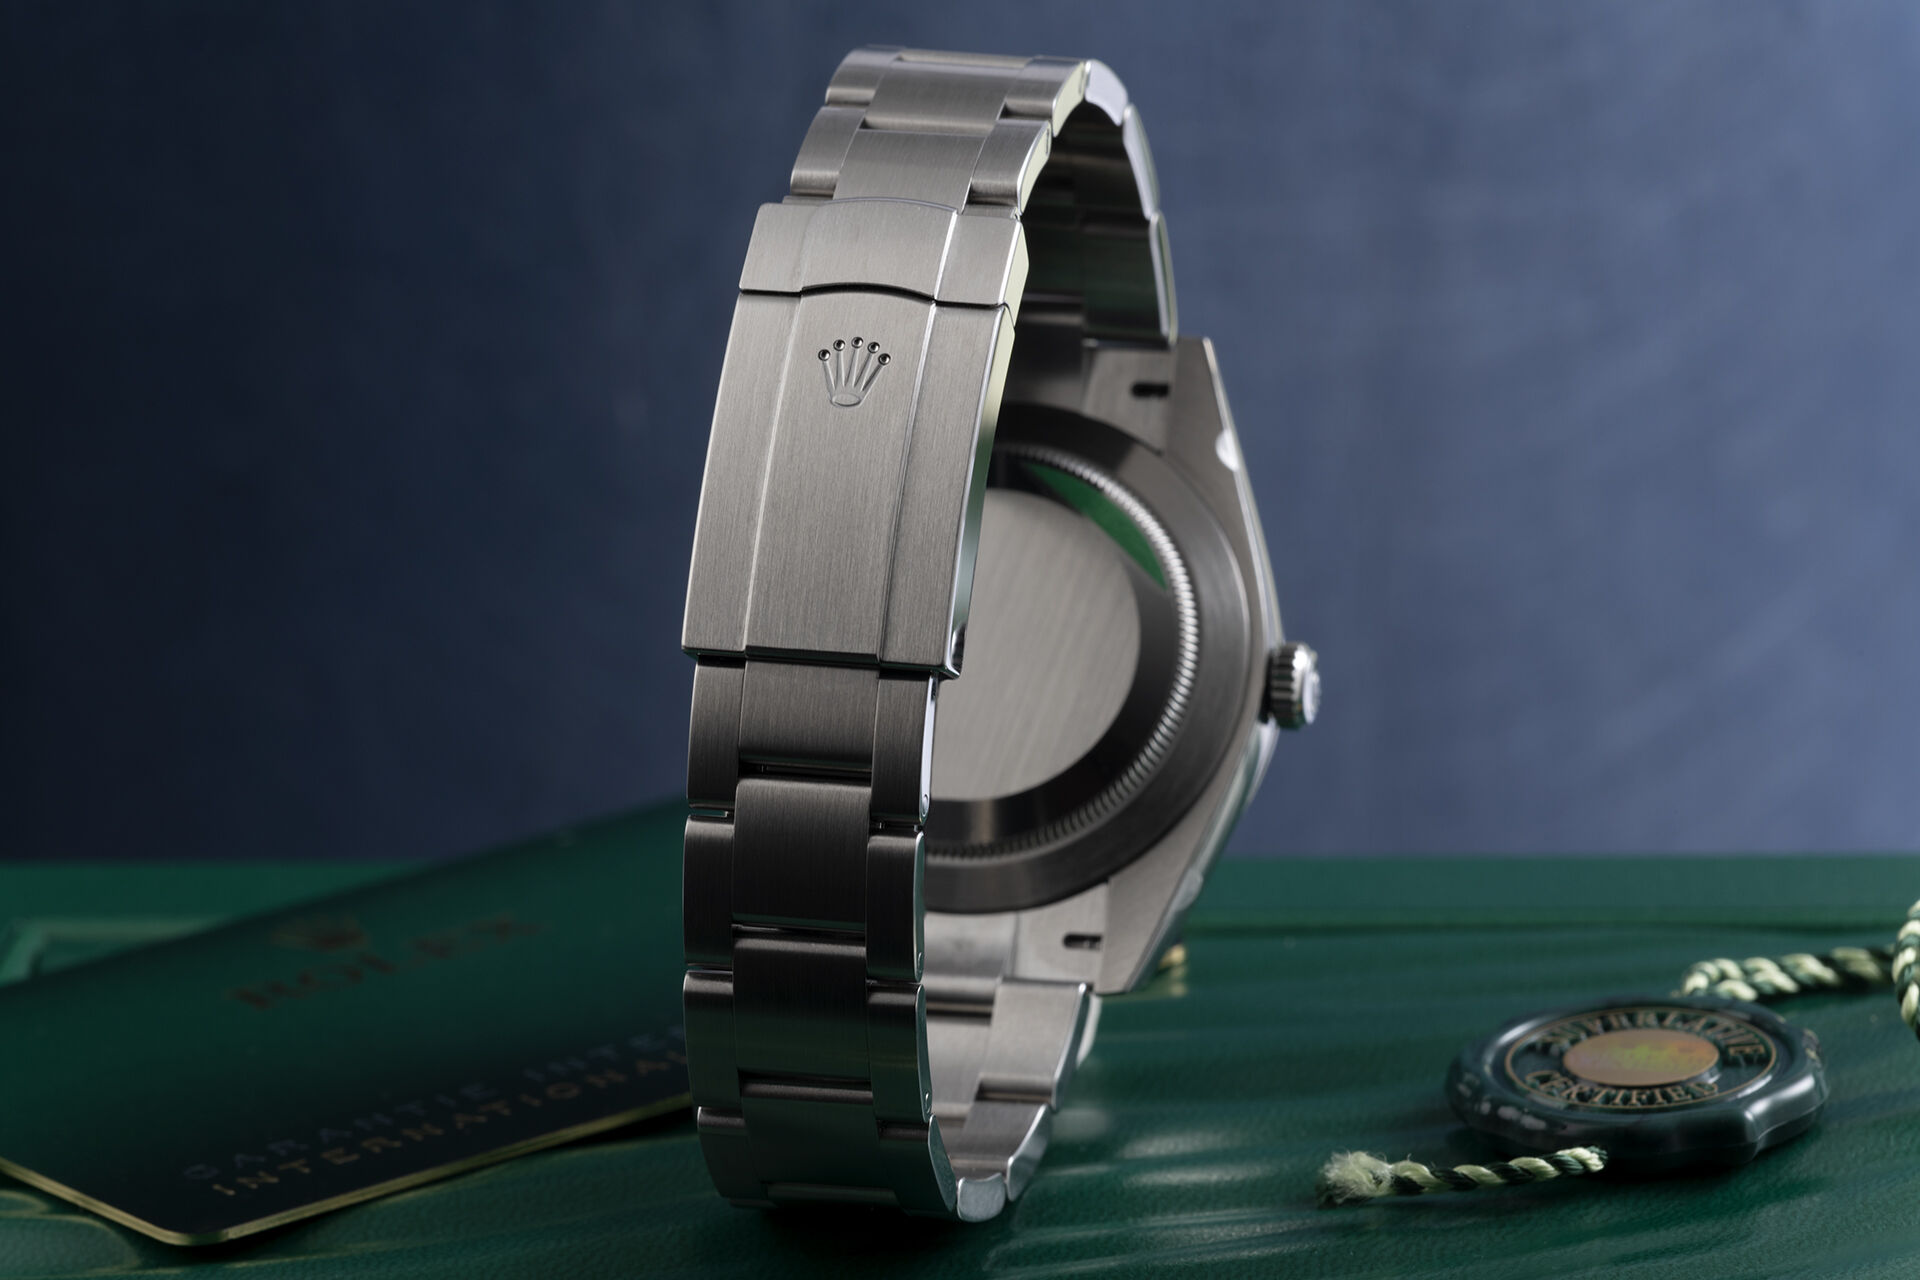 ref 124300 | New Release - 5 Year Warranty | Rolex Oyster Perpetual